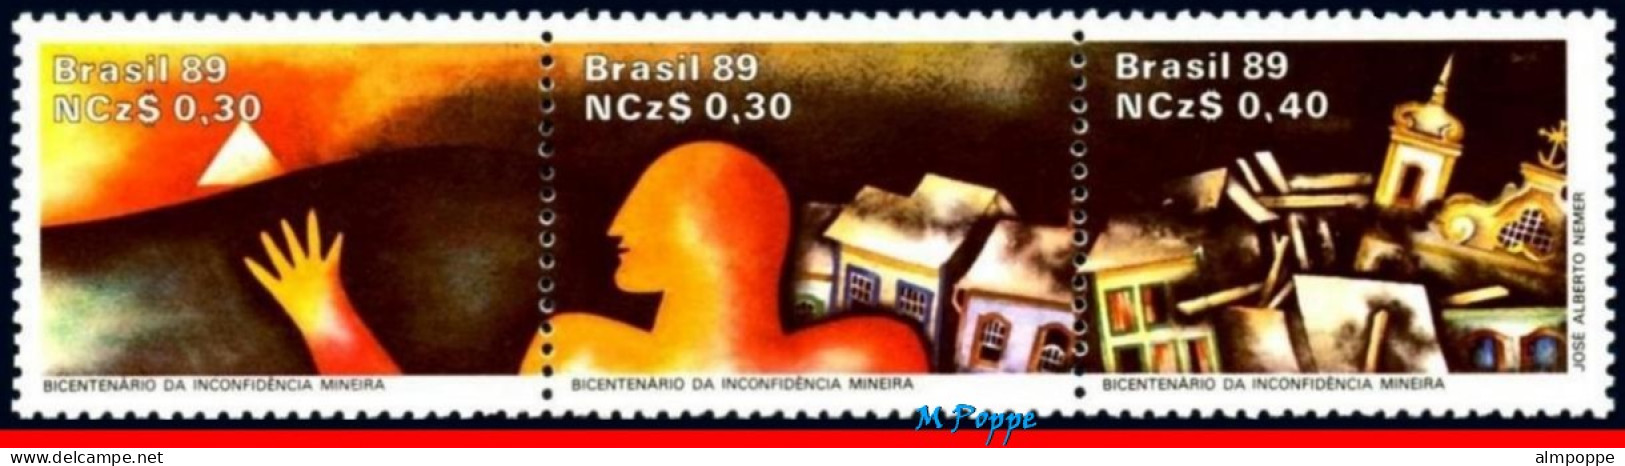 Ref. BR-2166-FO BRAZIL 1989 - INDEPENDENCE MOVEMENT,CONSPIRACY, MINAS, MI# 2295-97,SHEET MNH, HISTORY 30V Sc# 2166 - Blocs-feuillets